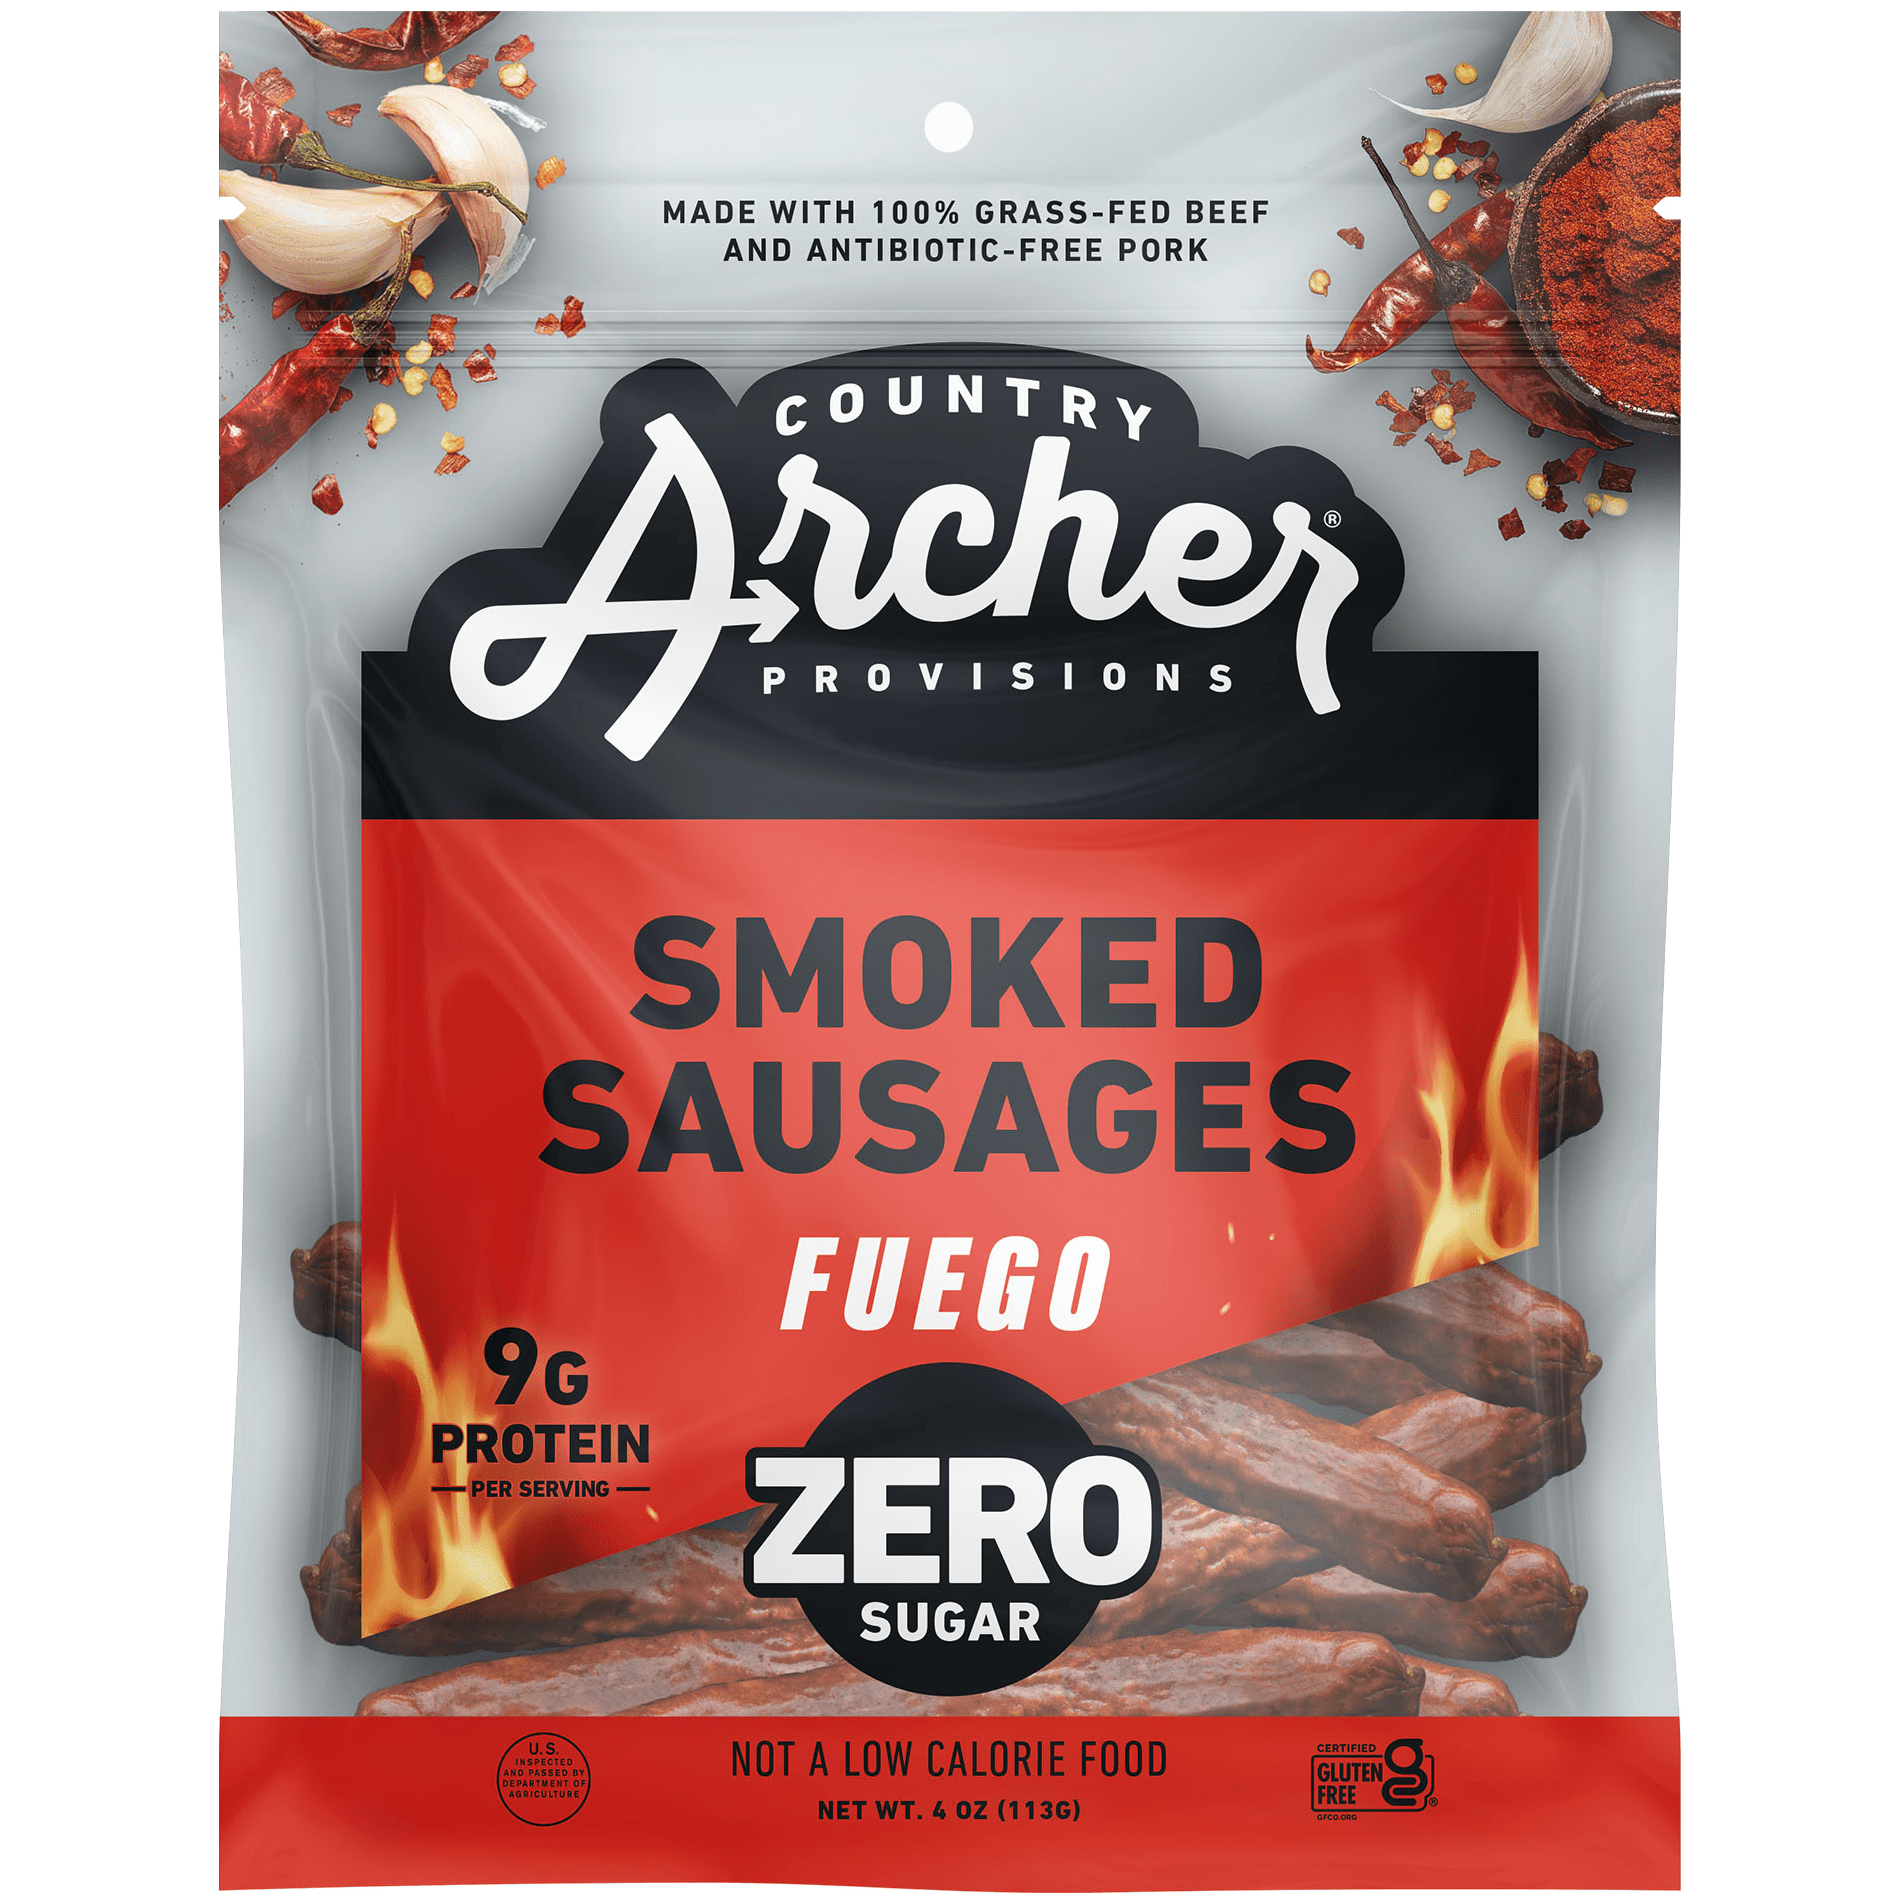  Fuego Smoked Sausage by Country Archer Provisions, Fuego Smoked Sausage, All Natural, fuego-smoked-sausage, , 4oz Bag